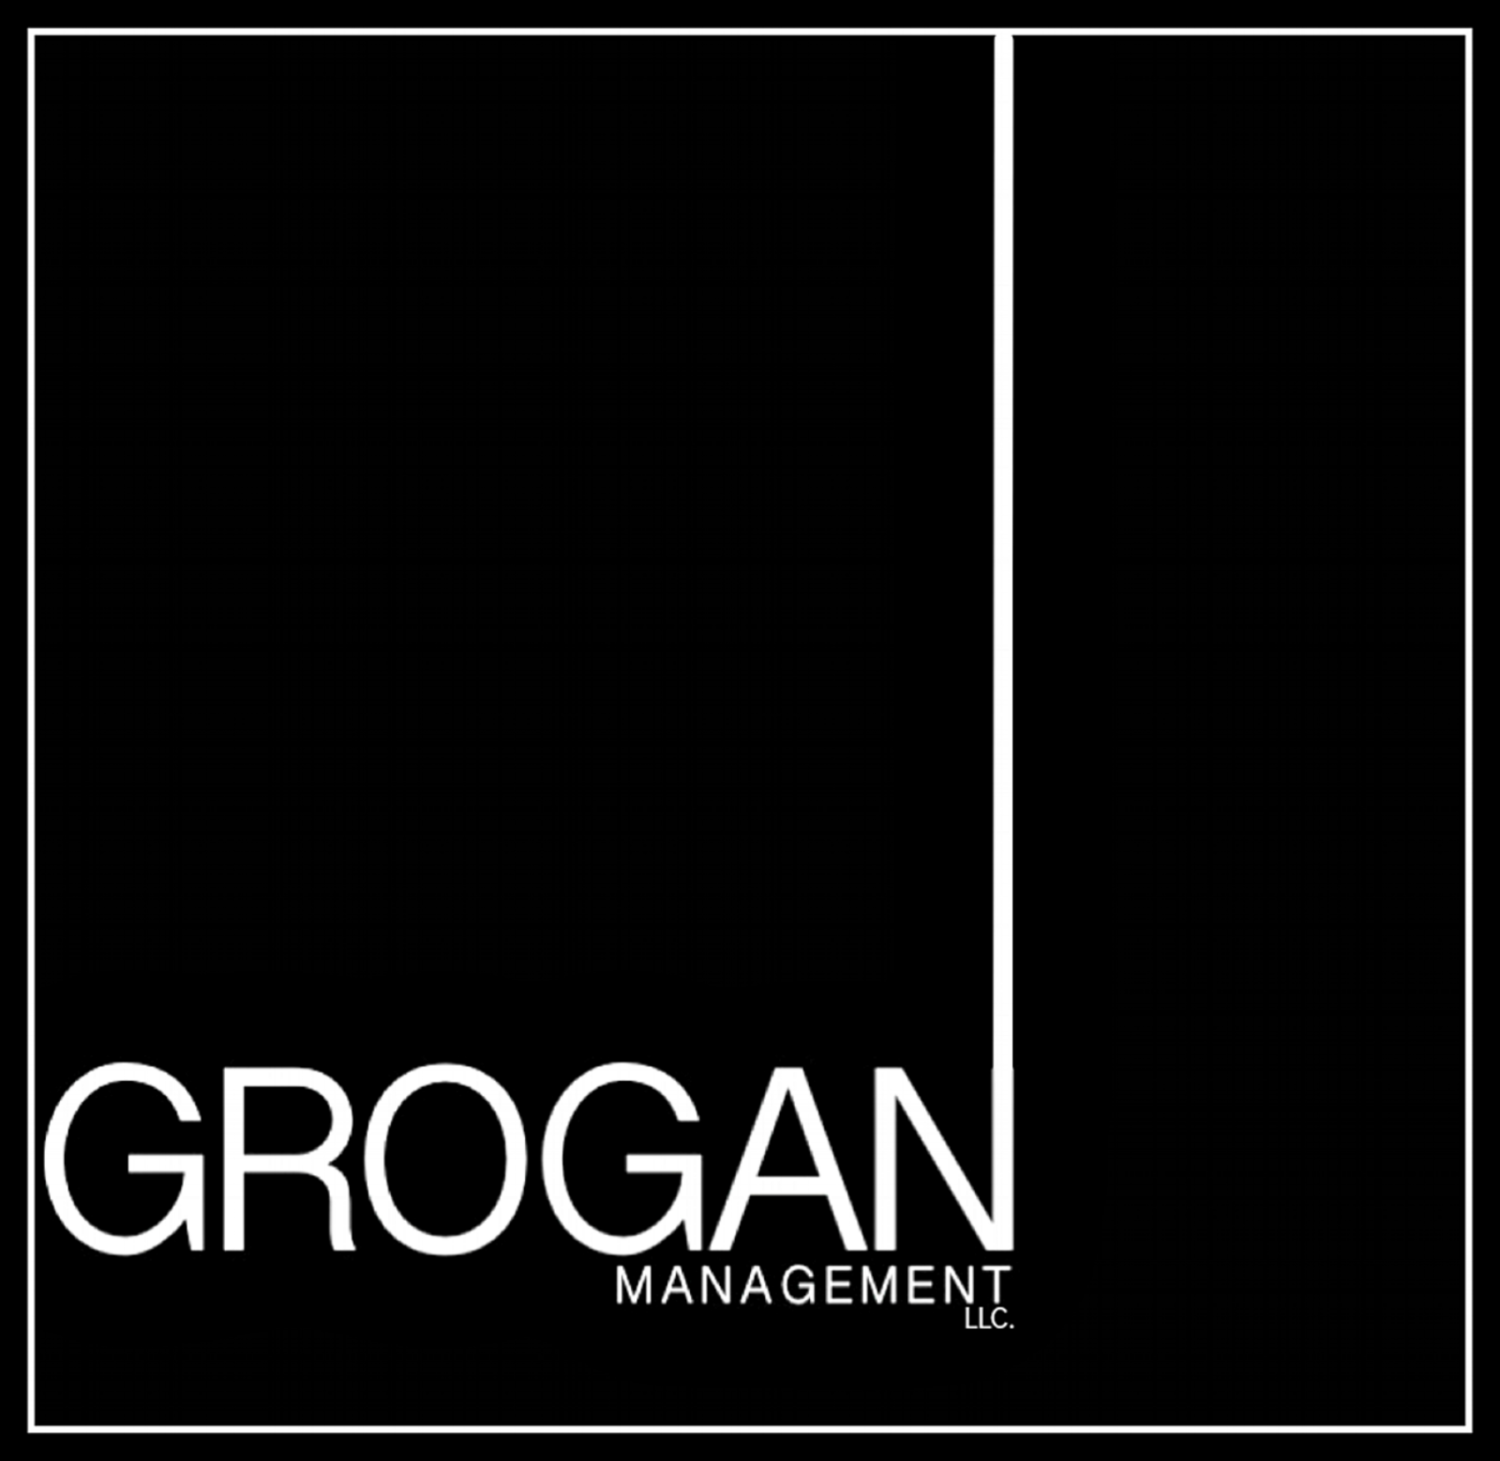 GROGAN MANAGEMENT LLC.